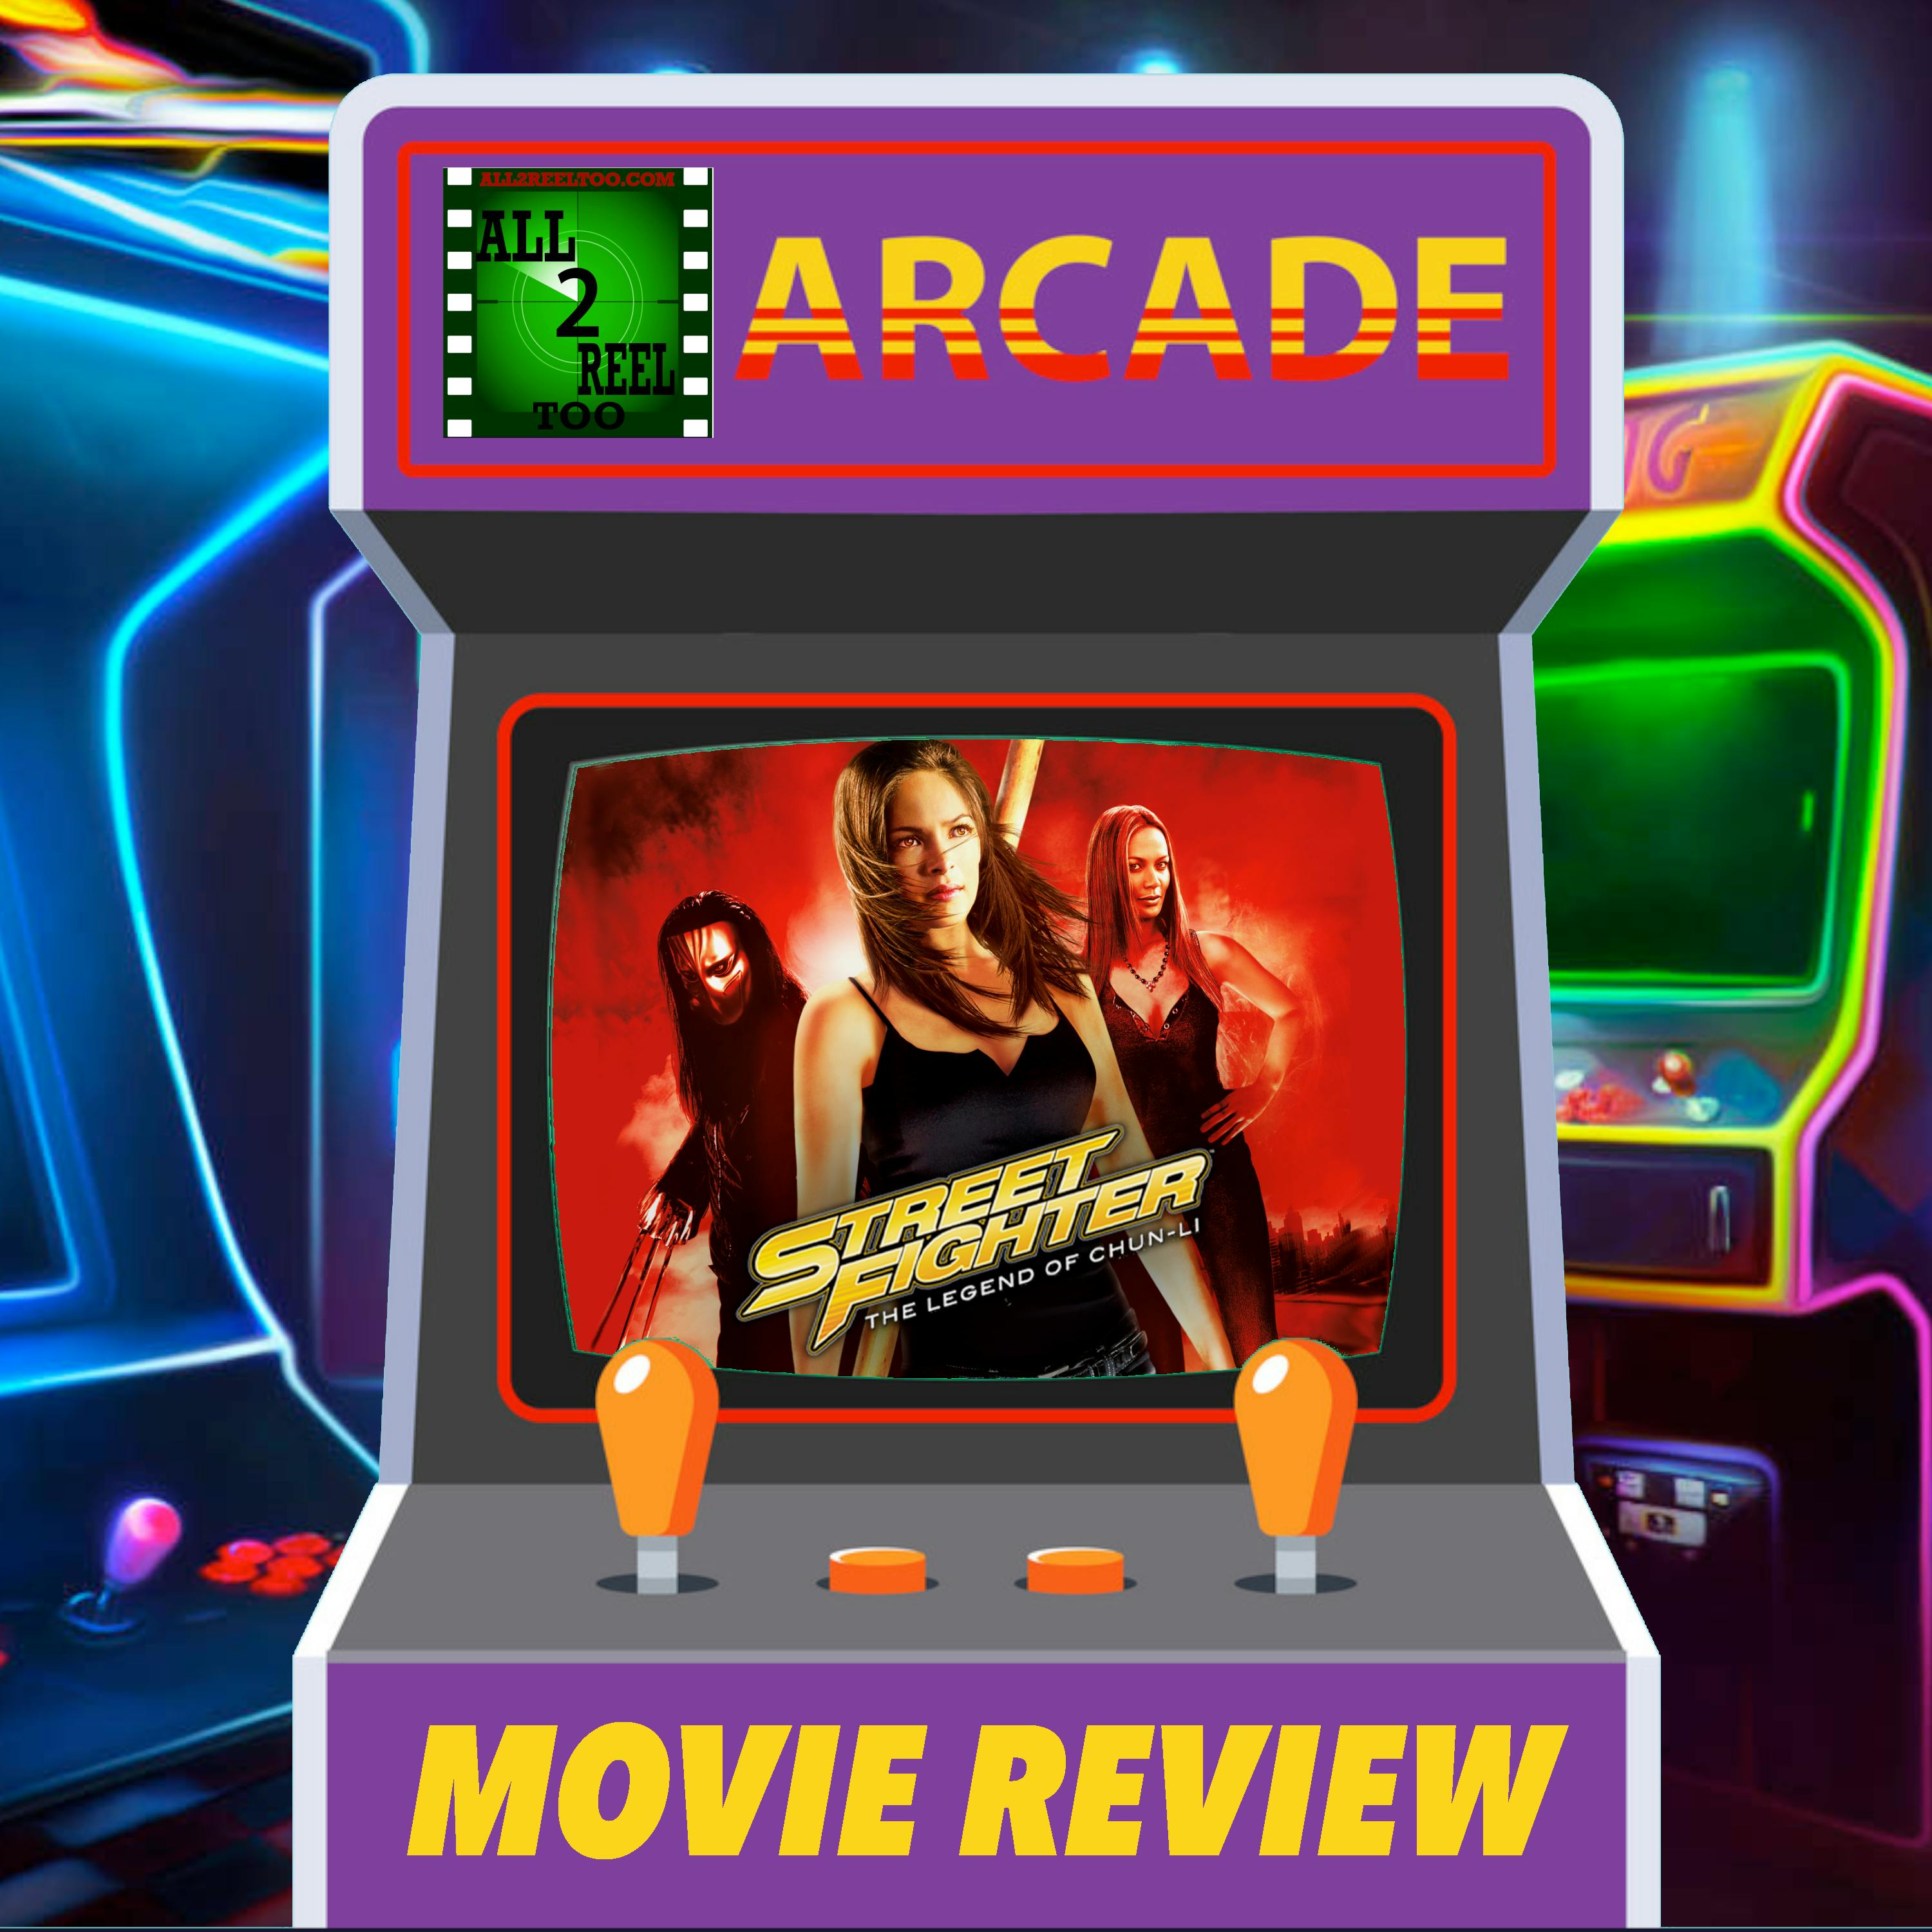 Street Fighter: The Legend of Chun-Li (2009) - Arcade Movie Review